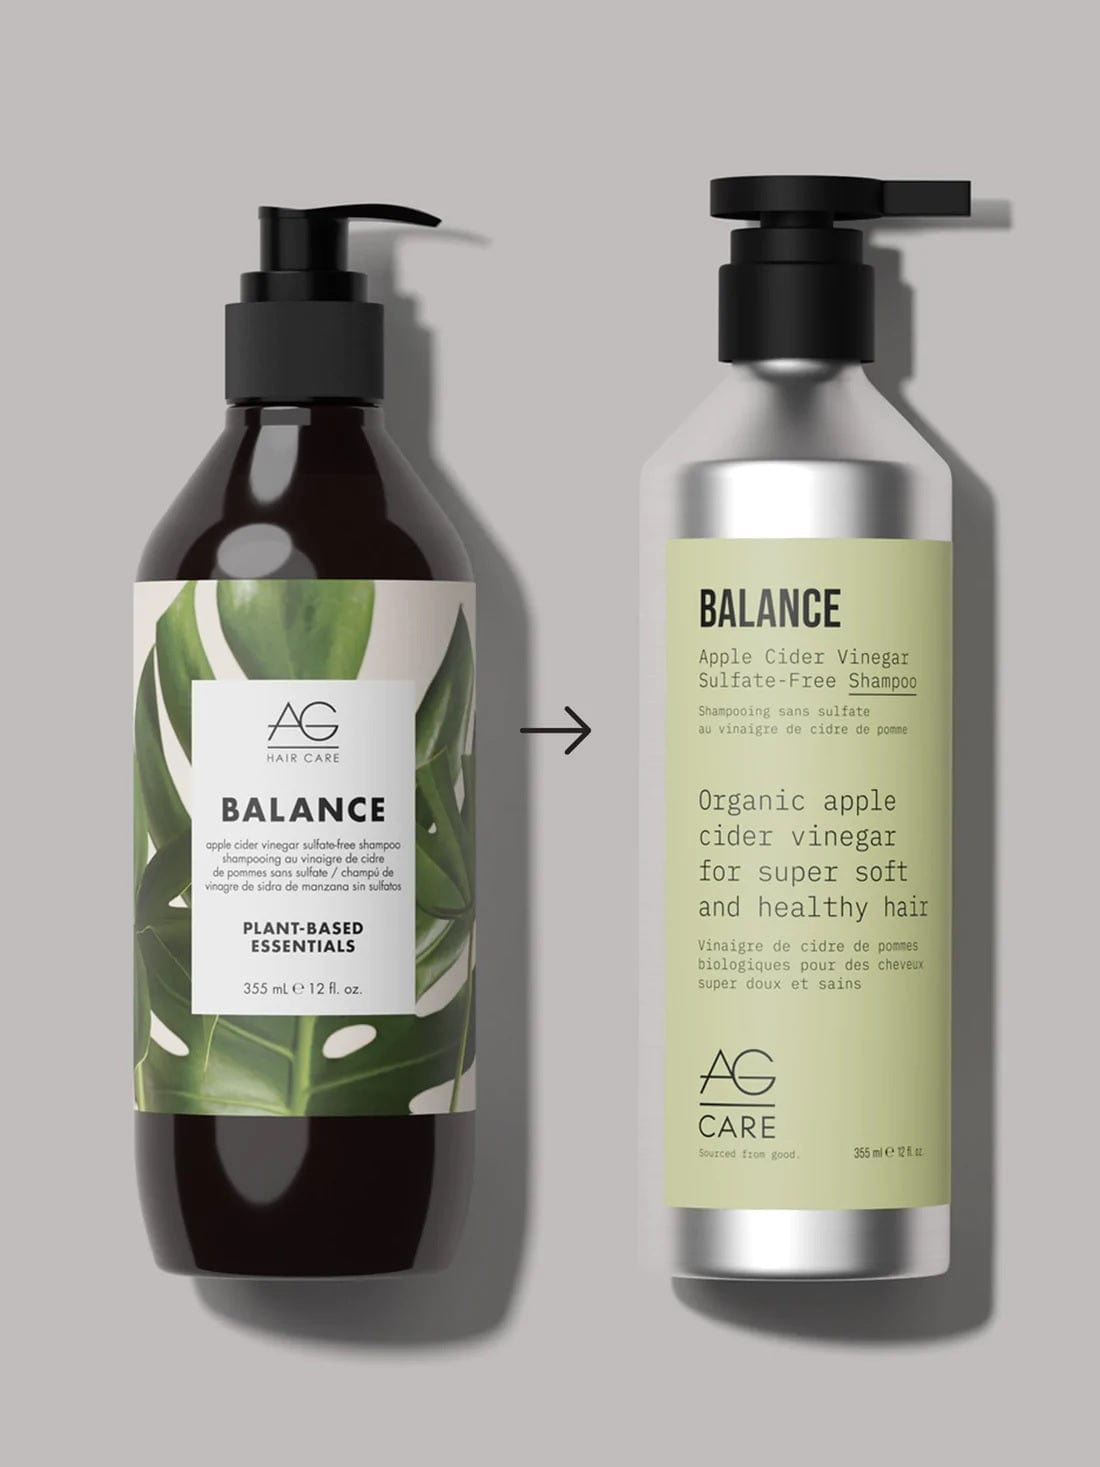 AG_BALANCE apple cider vinegar sulphate-free shampoo_Cosmetic World